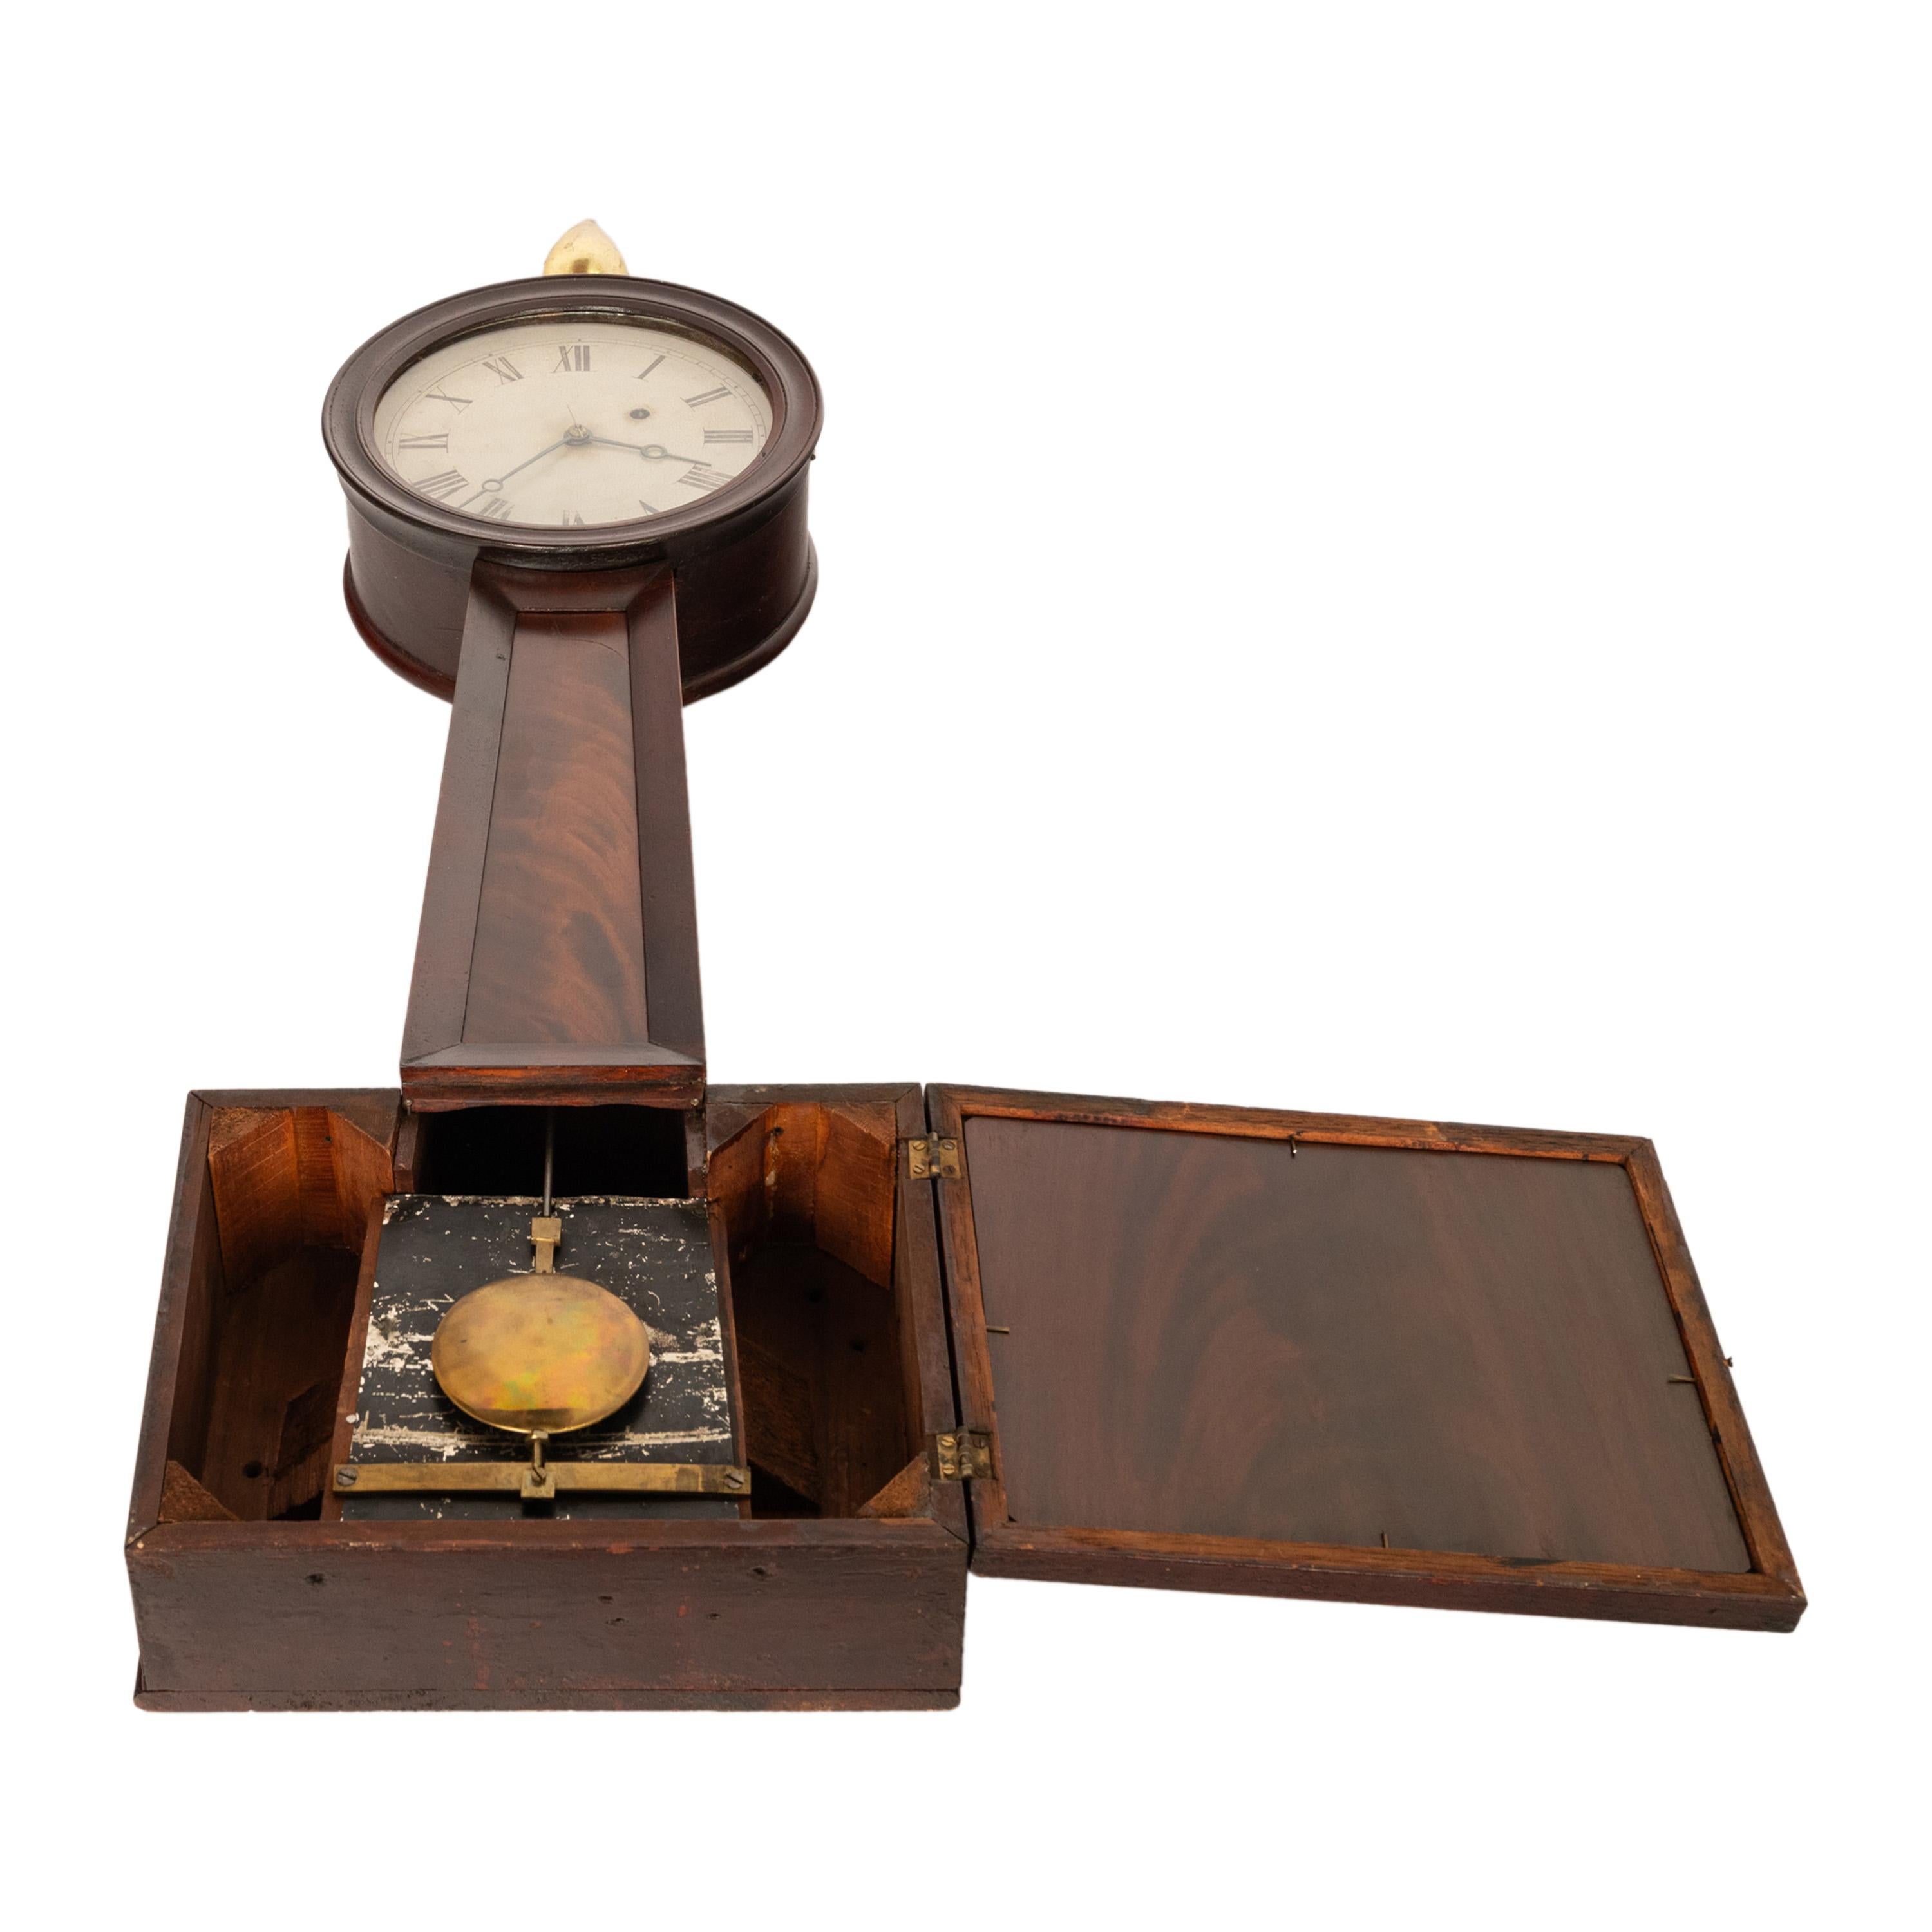 Mahogany Antique American Simon Willard & Son 8 Day Banjo Clock Patent Timepiece 1825